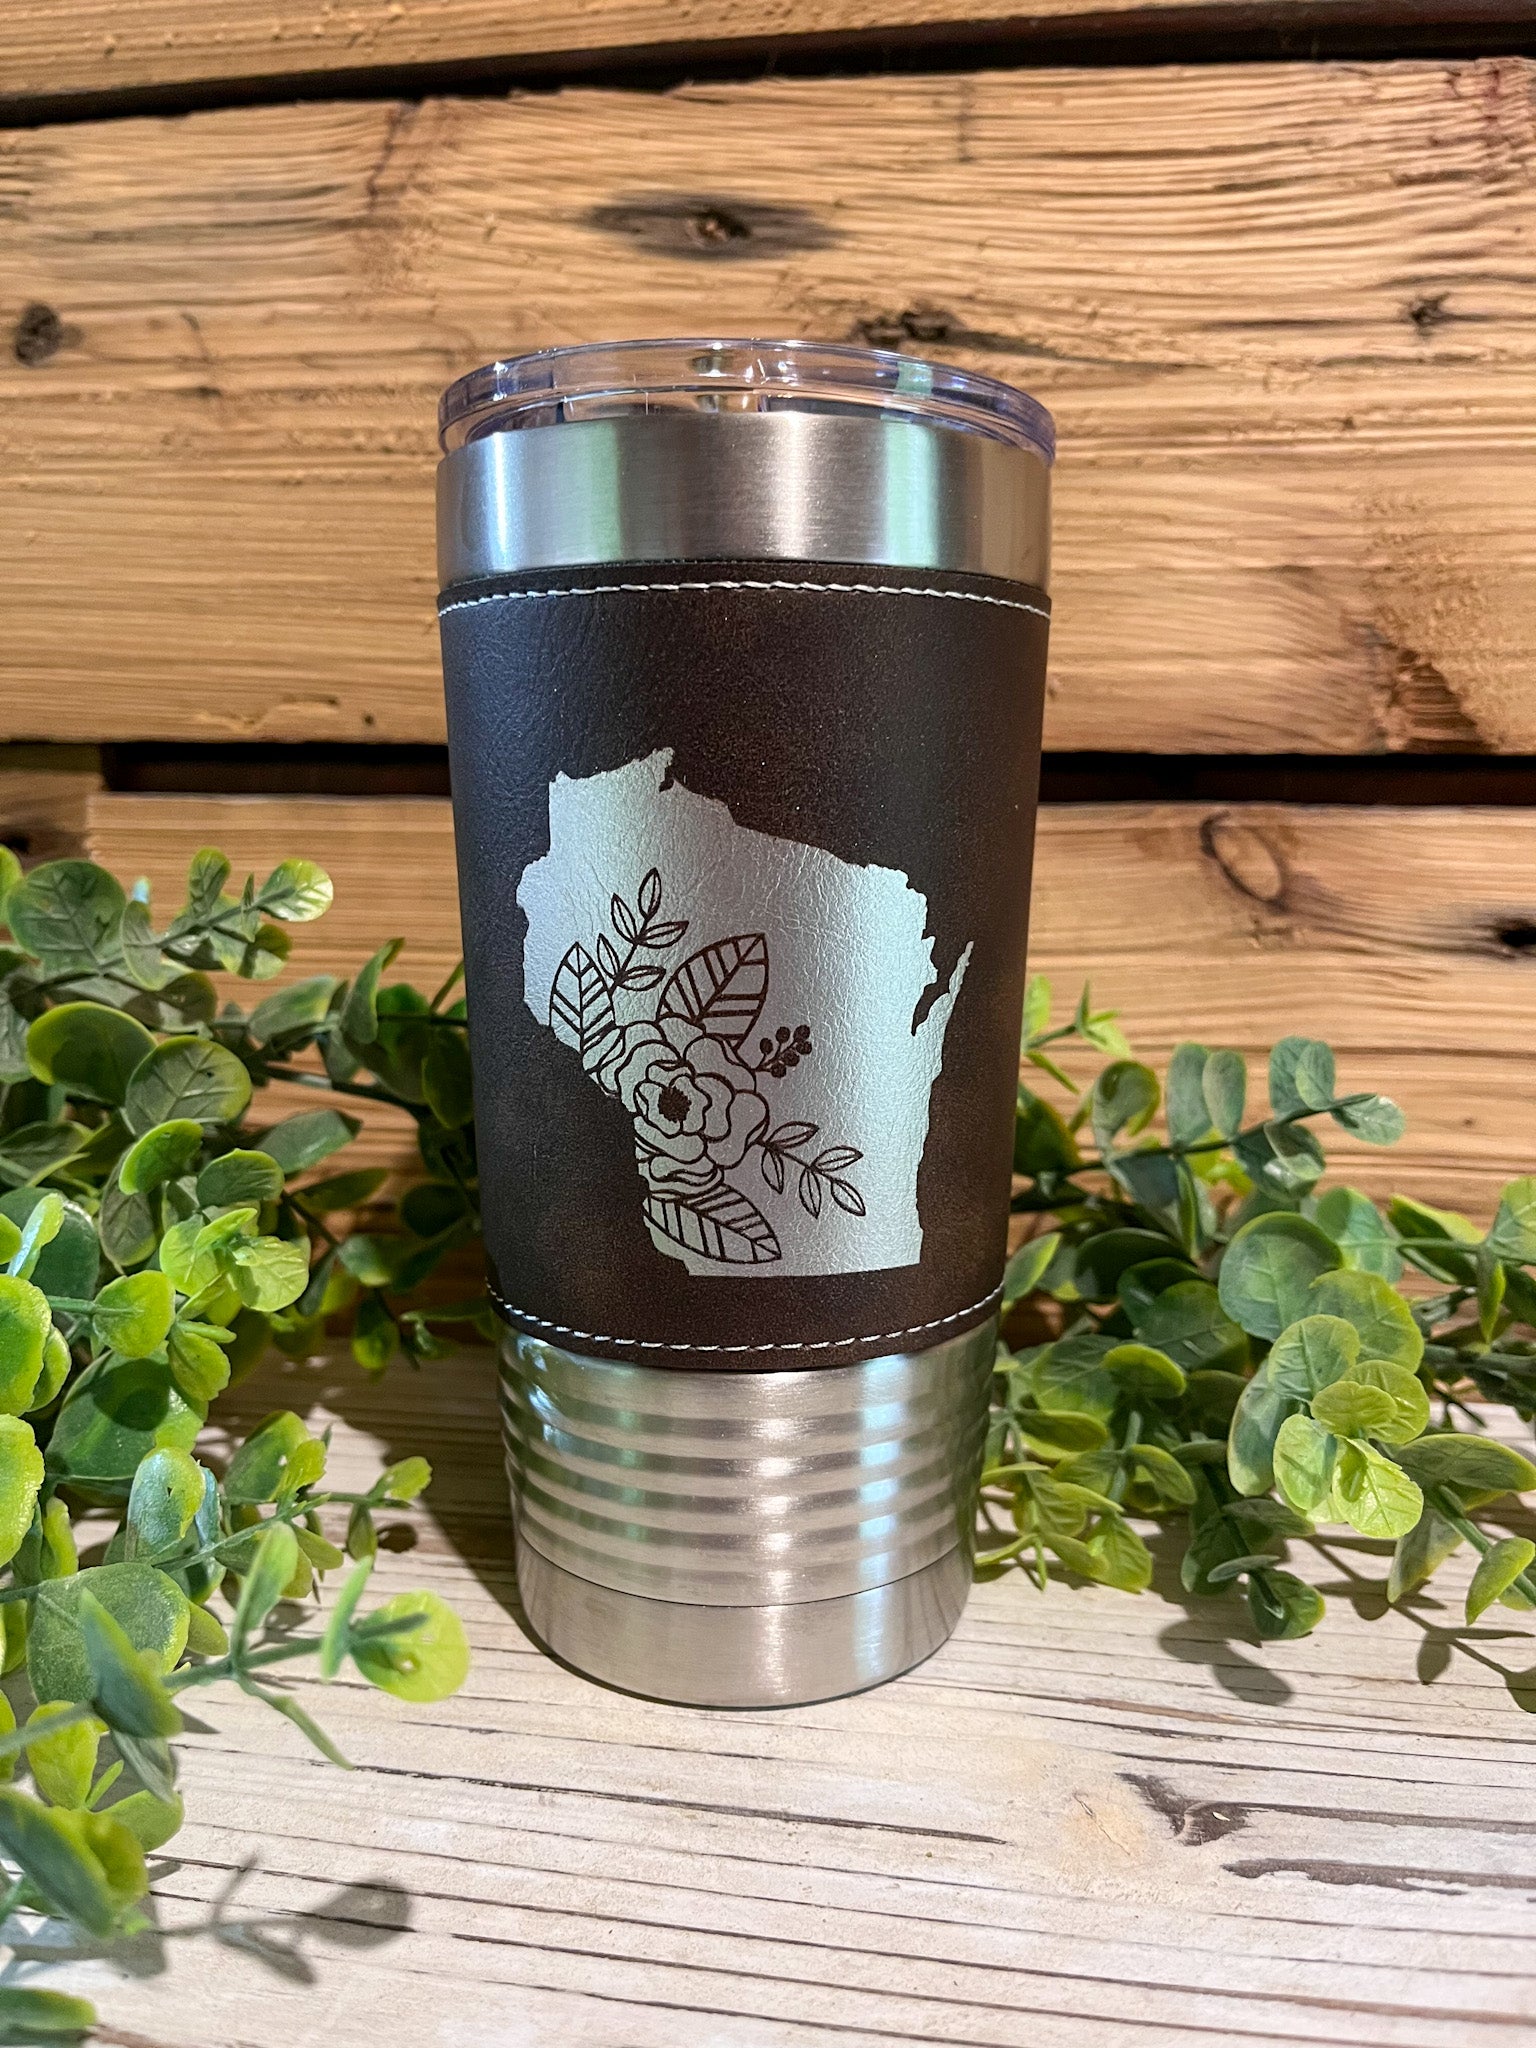 Wisconsin Gifts | Wisconsin Mug | Leather Mug | Engraved Tumbler